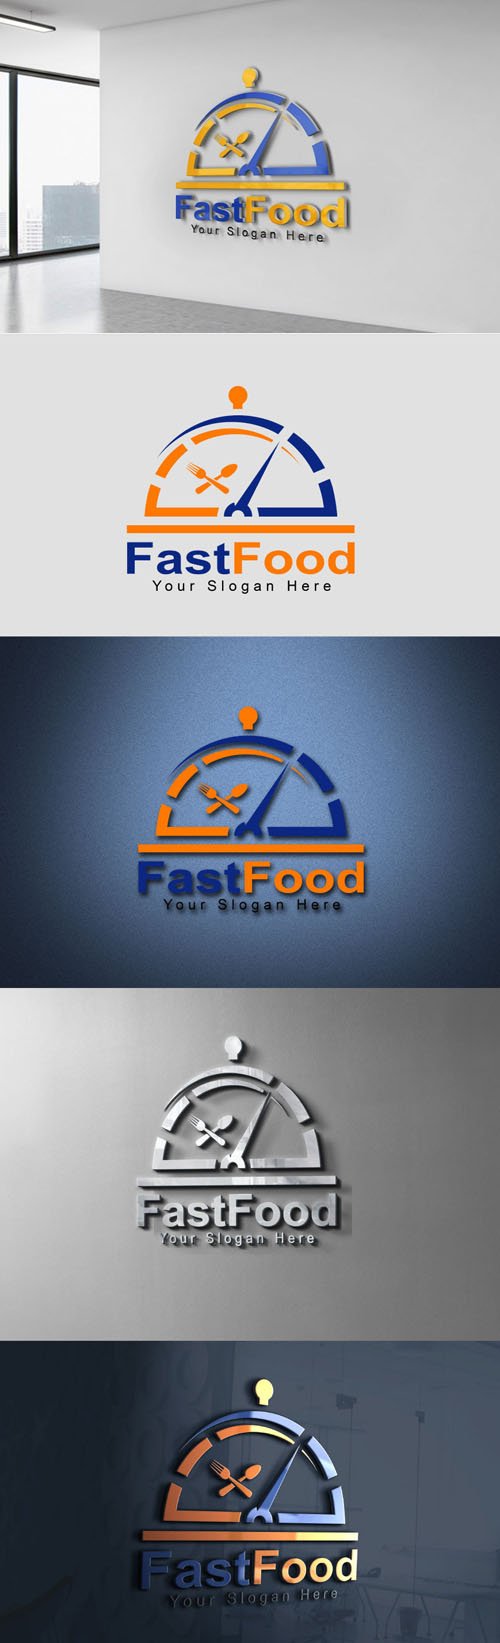 Fast Food Logo PSD Mockup Template